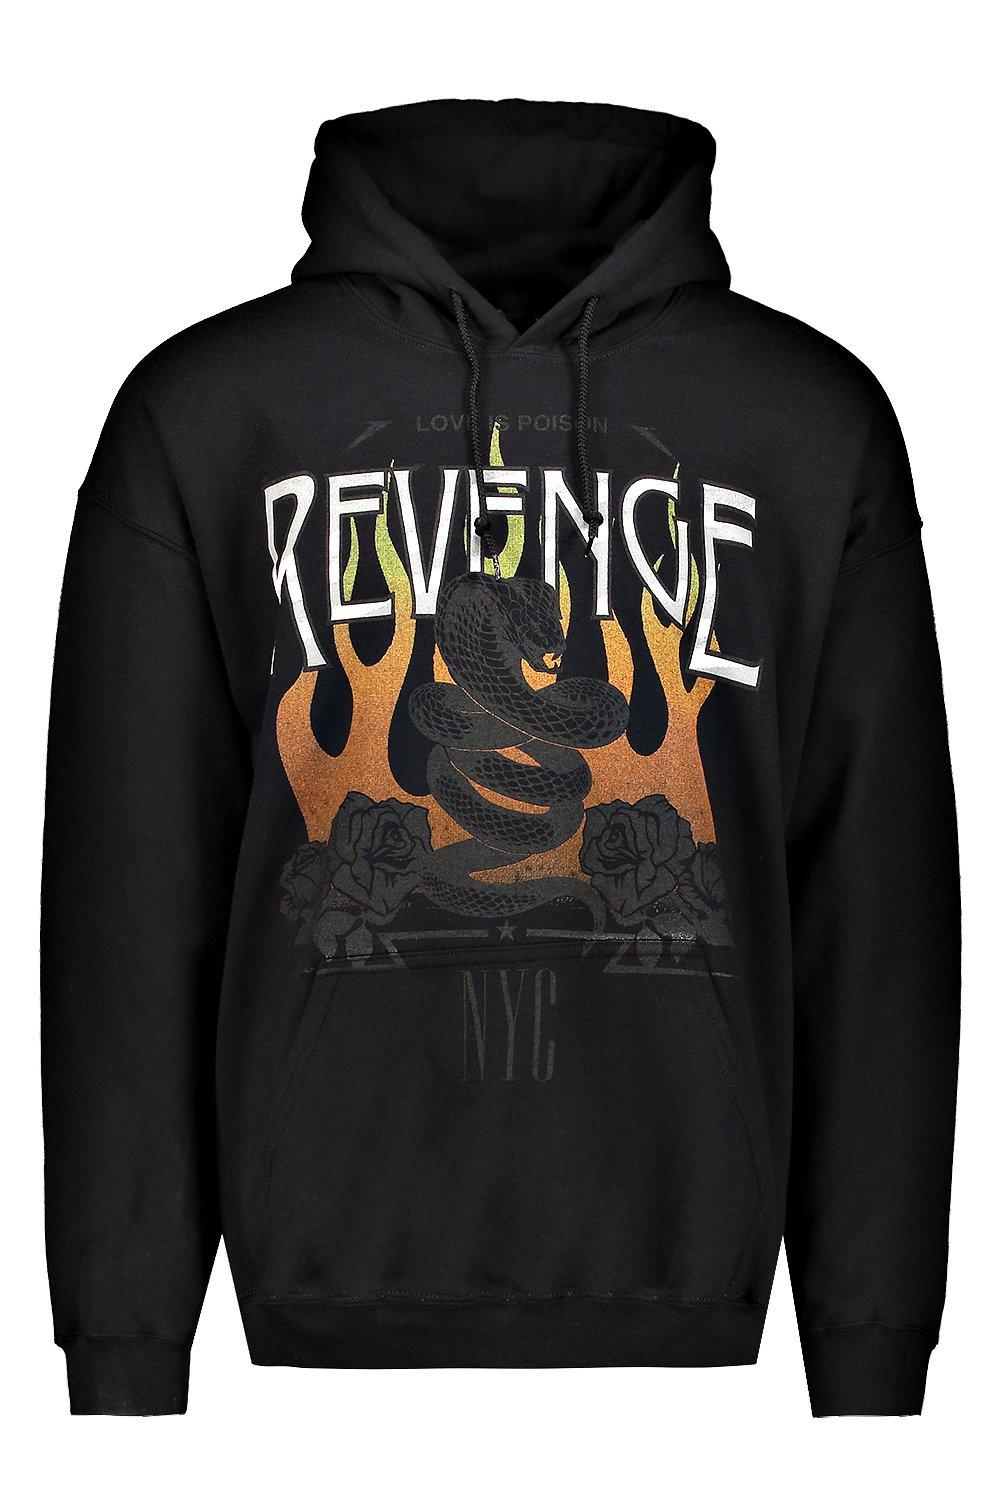 revenge neon hoodie